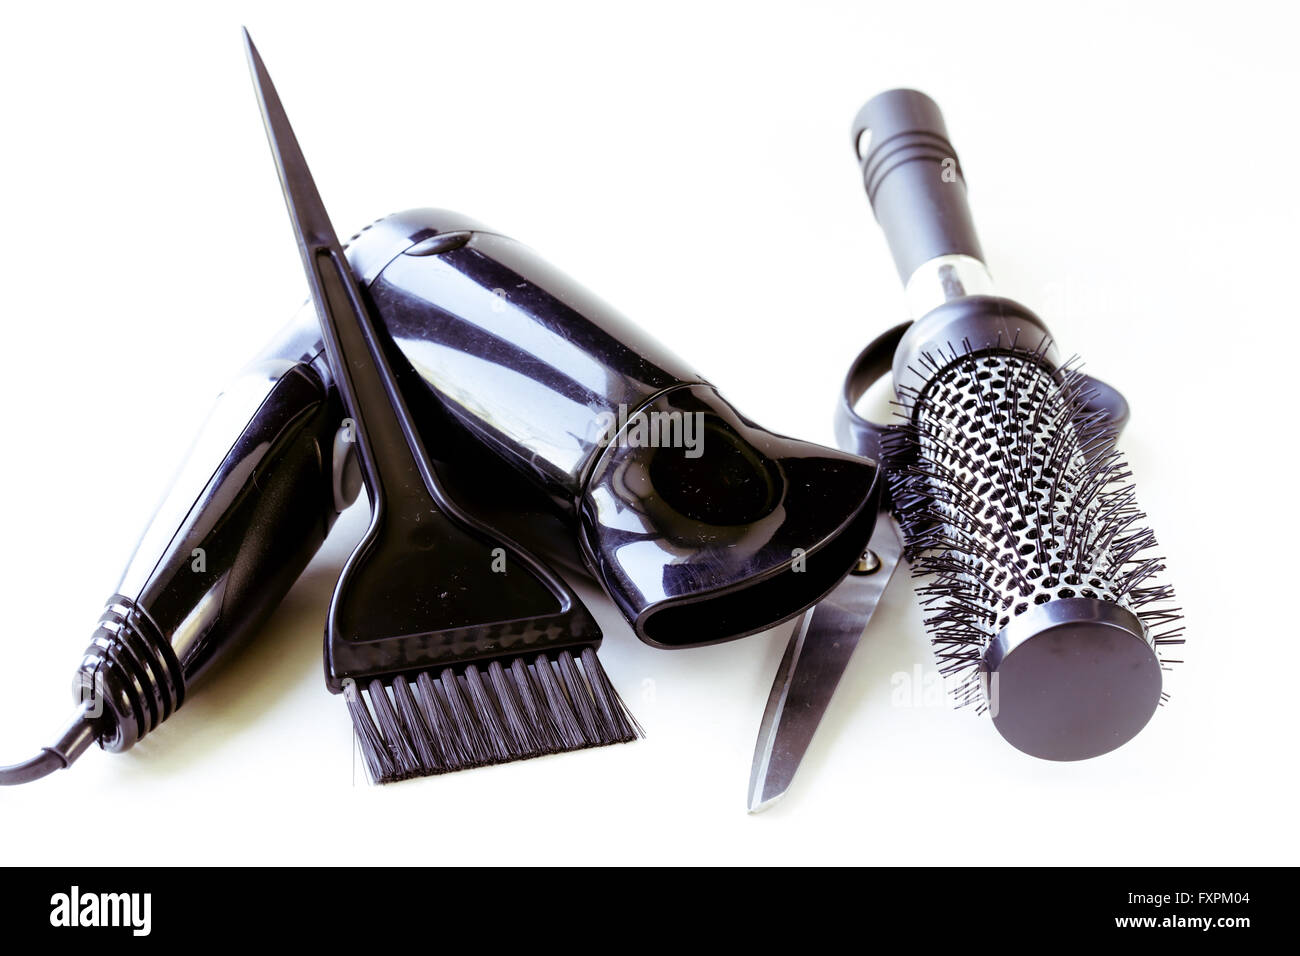 Strumenti per parrucchieri (asciugacapelli,forbici,pettini) Foto Stock